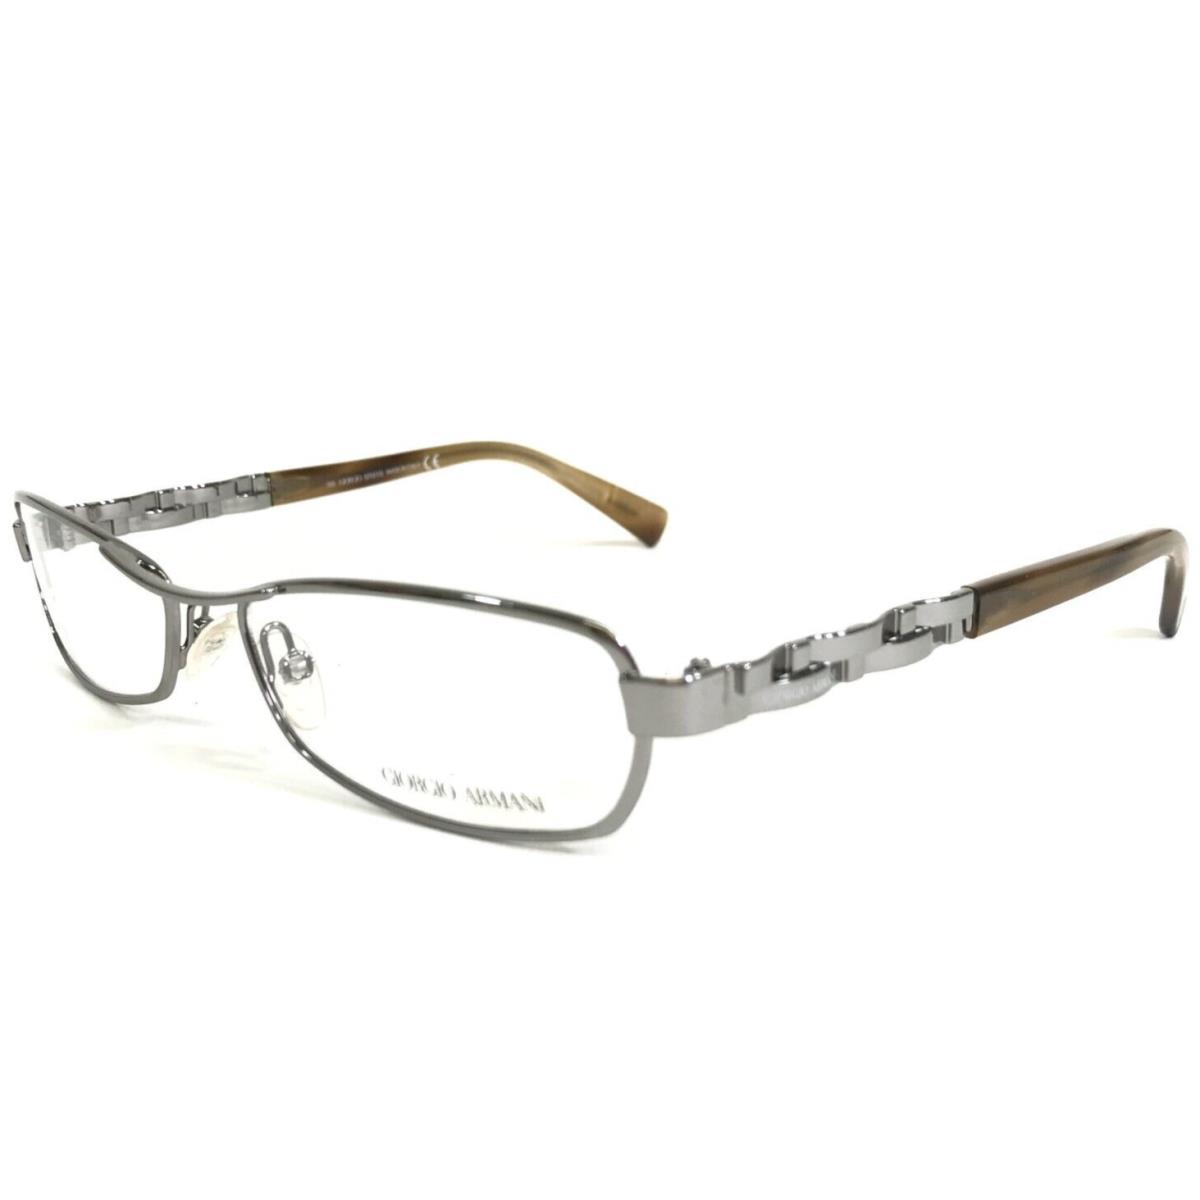 Giorgio Armani GA591 6LB Silver Rectangular Metal Eyeglasses Frames 52-16-135